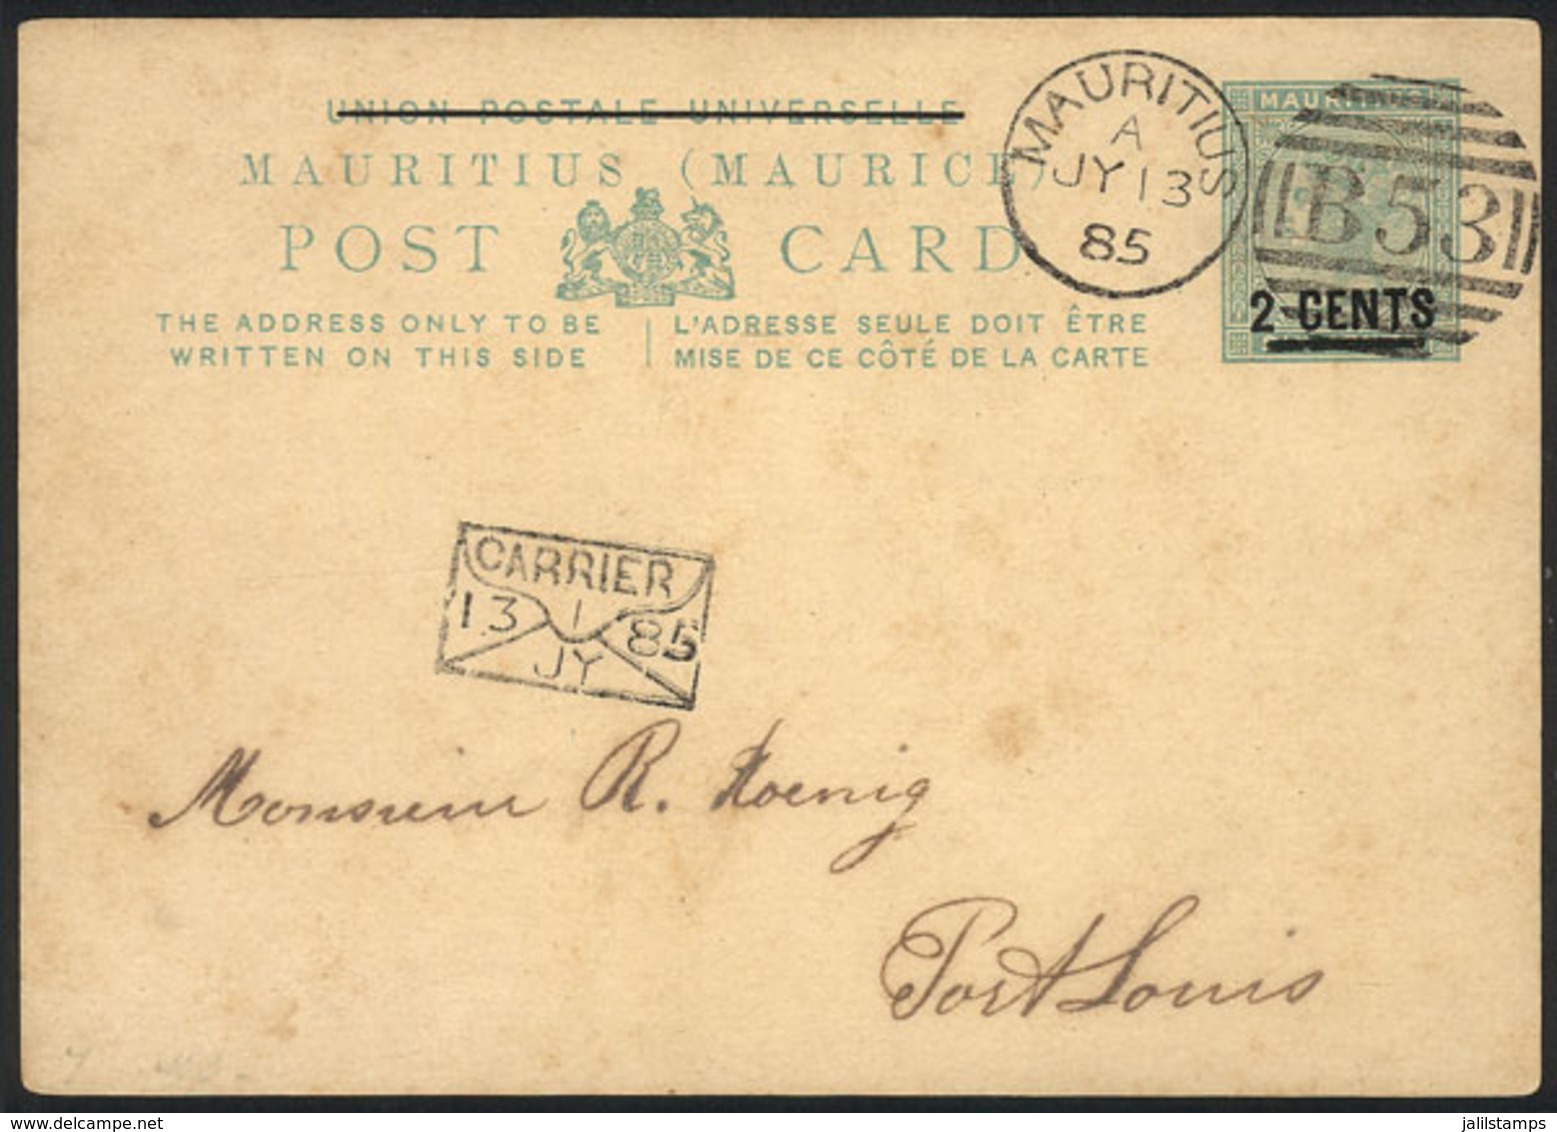 MAURITIUS: Postal Card Sent To Port Saint Louis On 13/JUL/1885, VF Quality! - Maurice (...-1967)